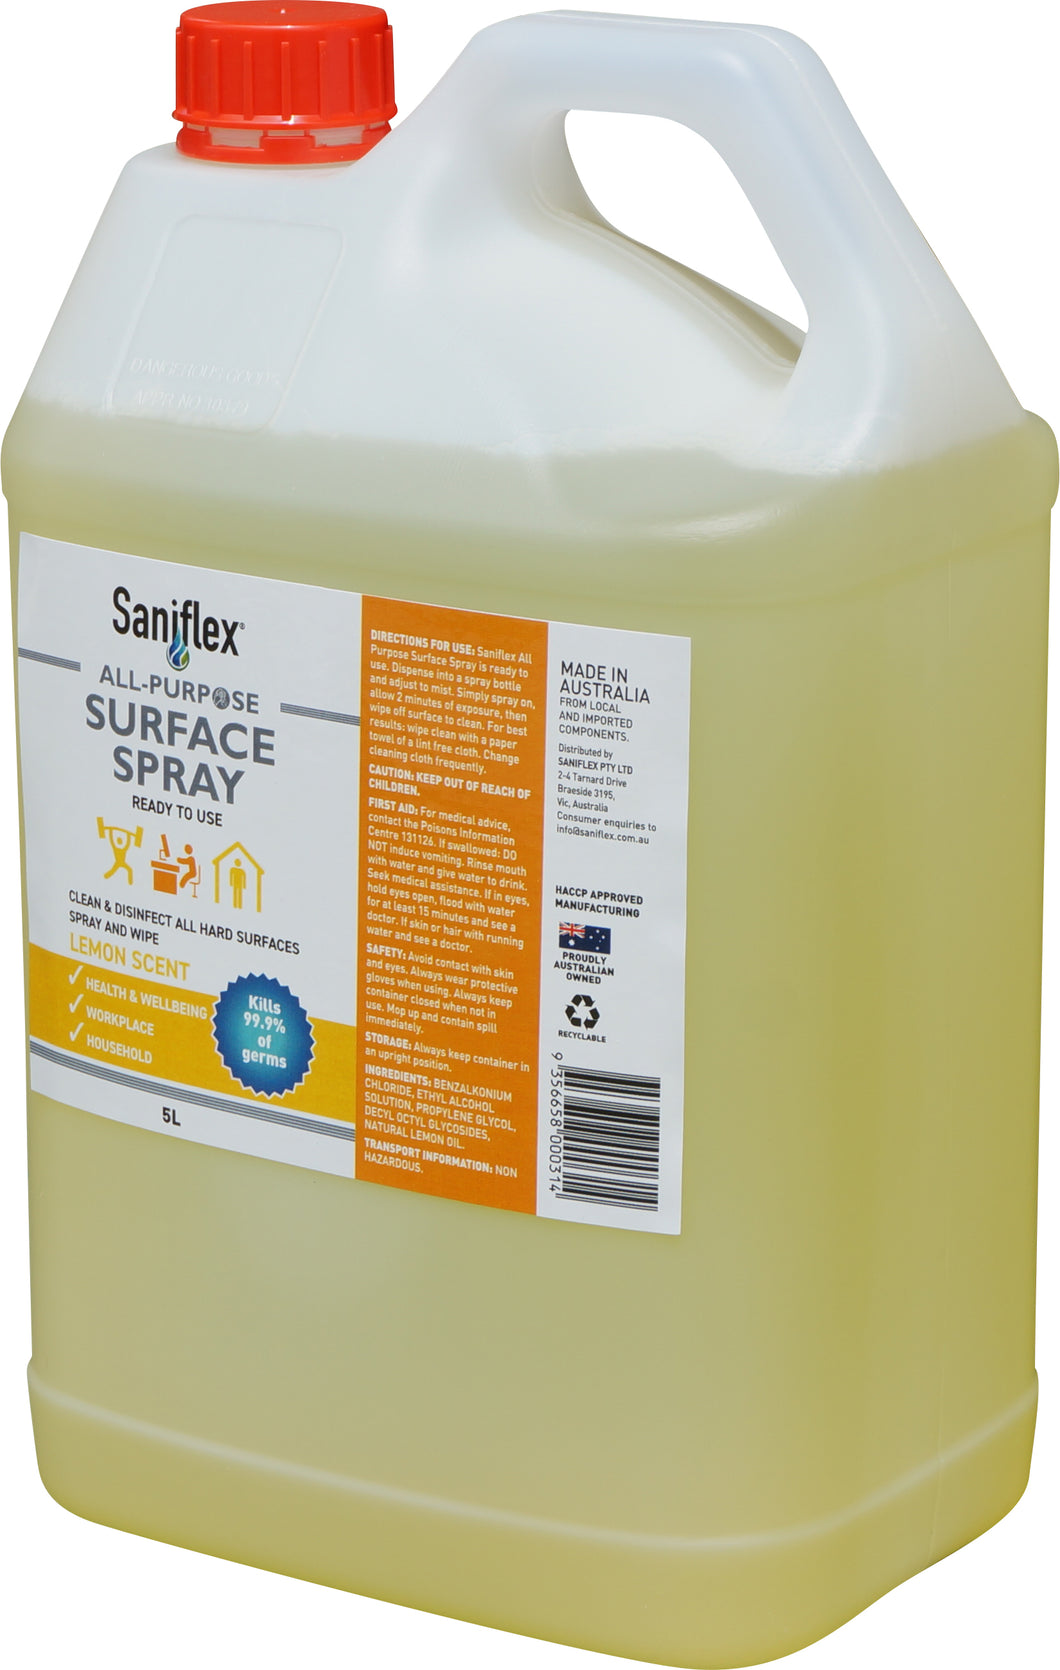 All Purpose Surface Spray Lemon Scent 5L Refill Bottle (Carton of 3)